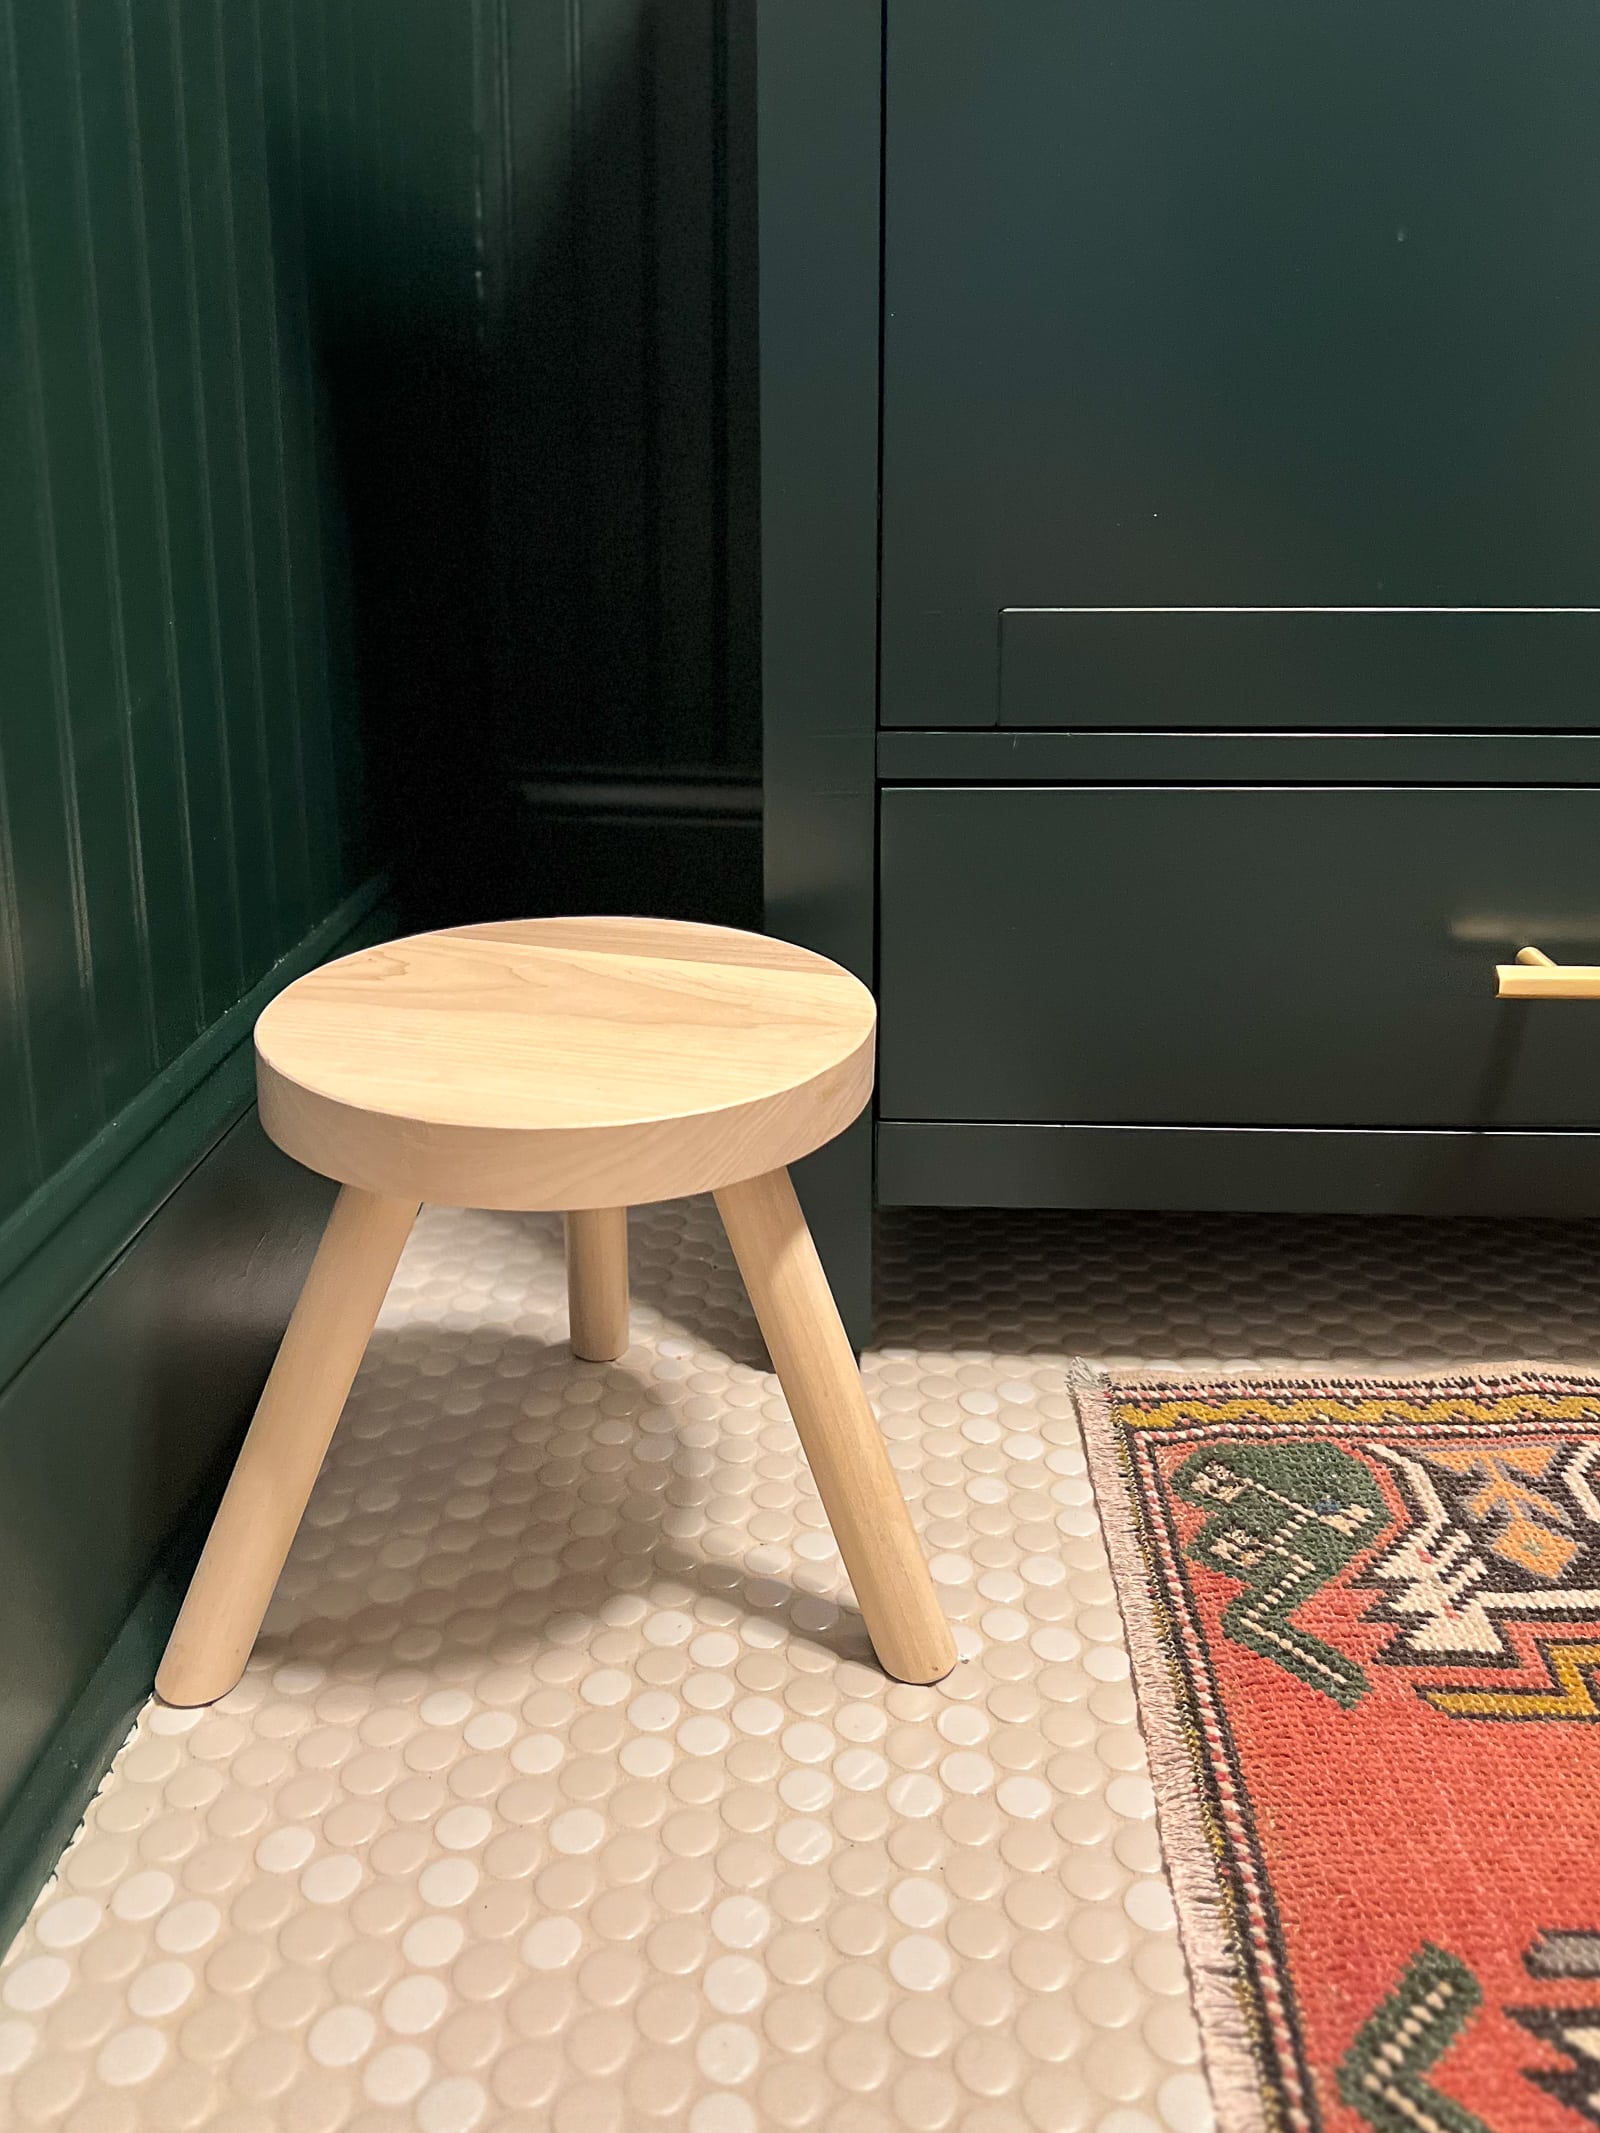 Wood step stool in a bathroom